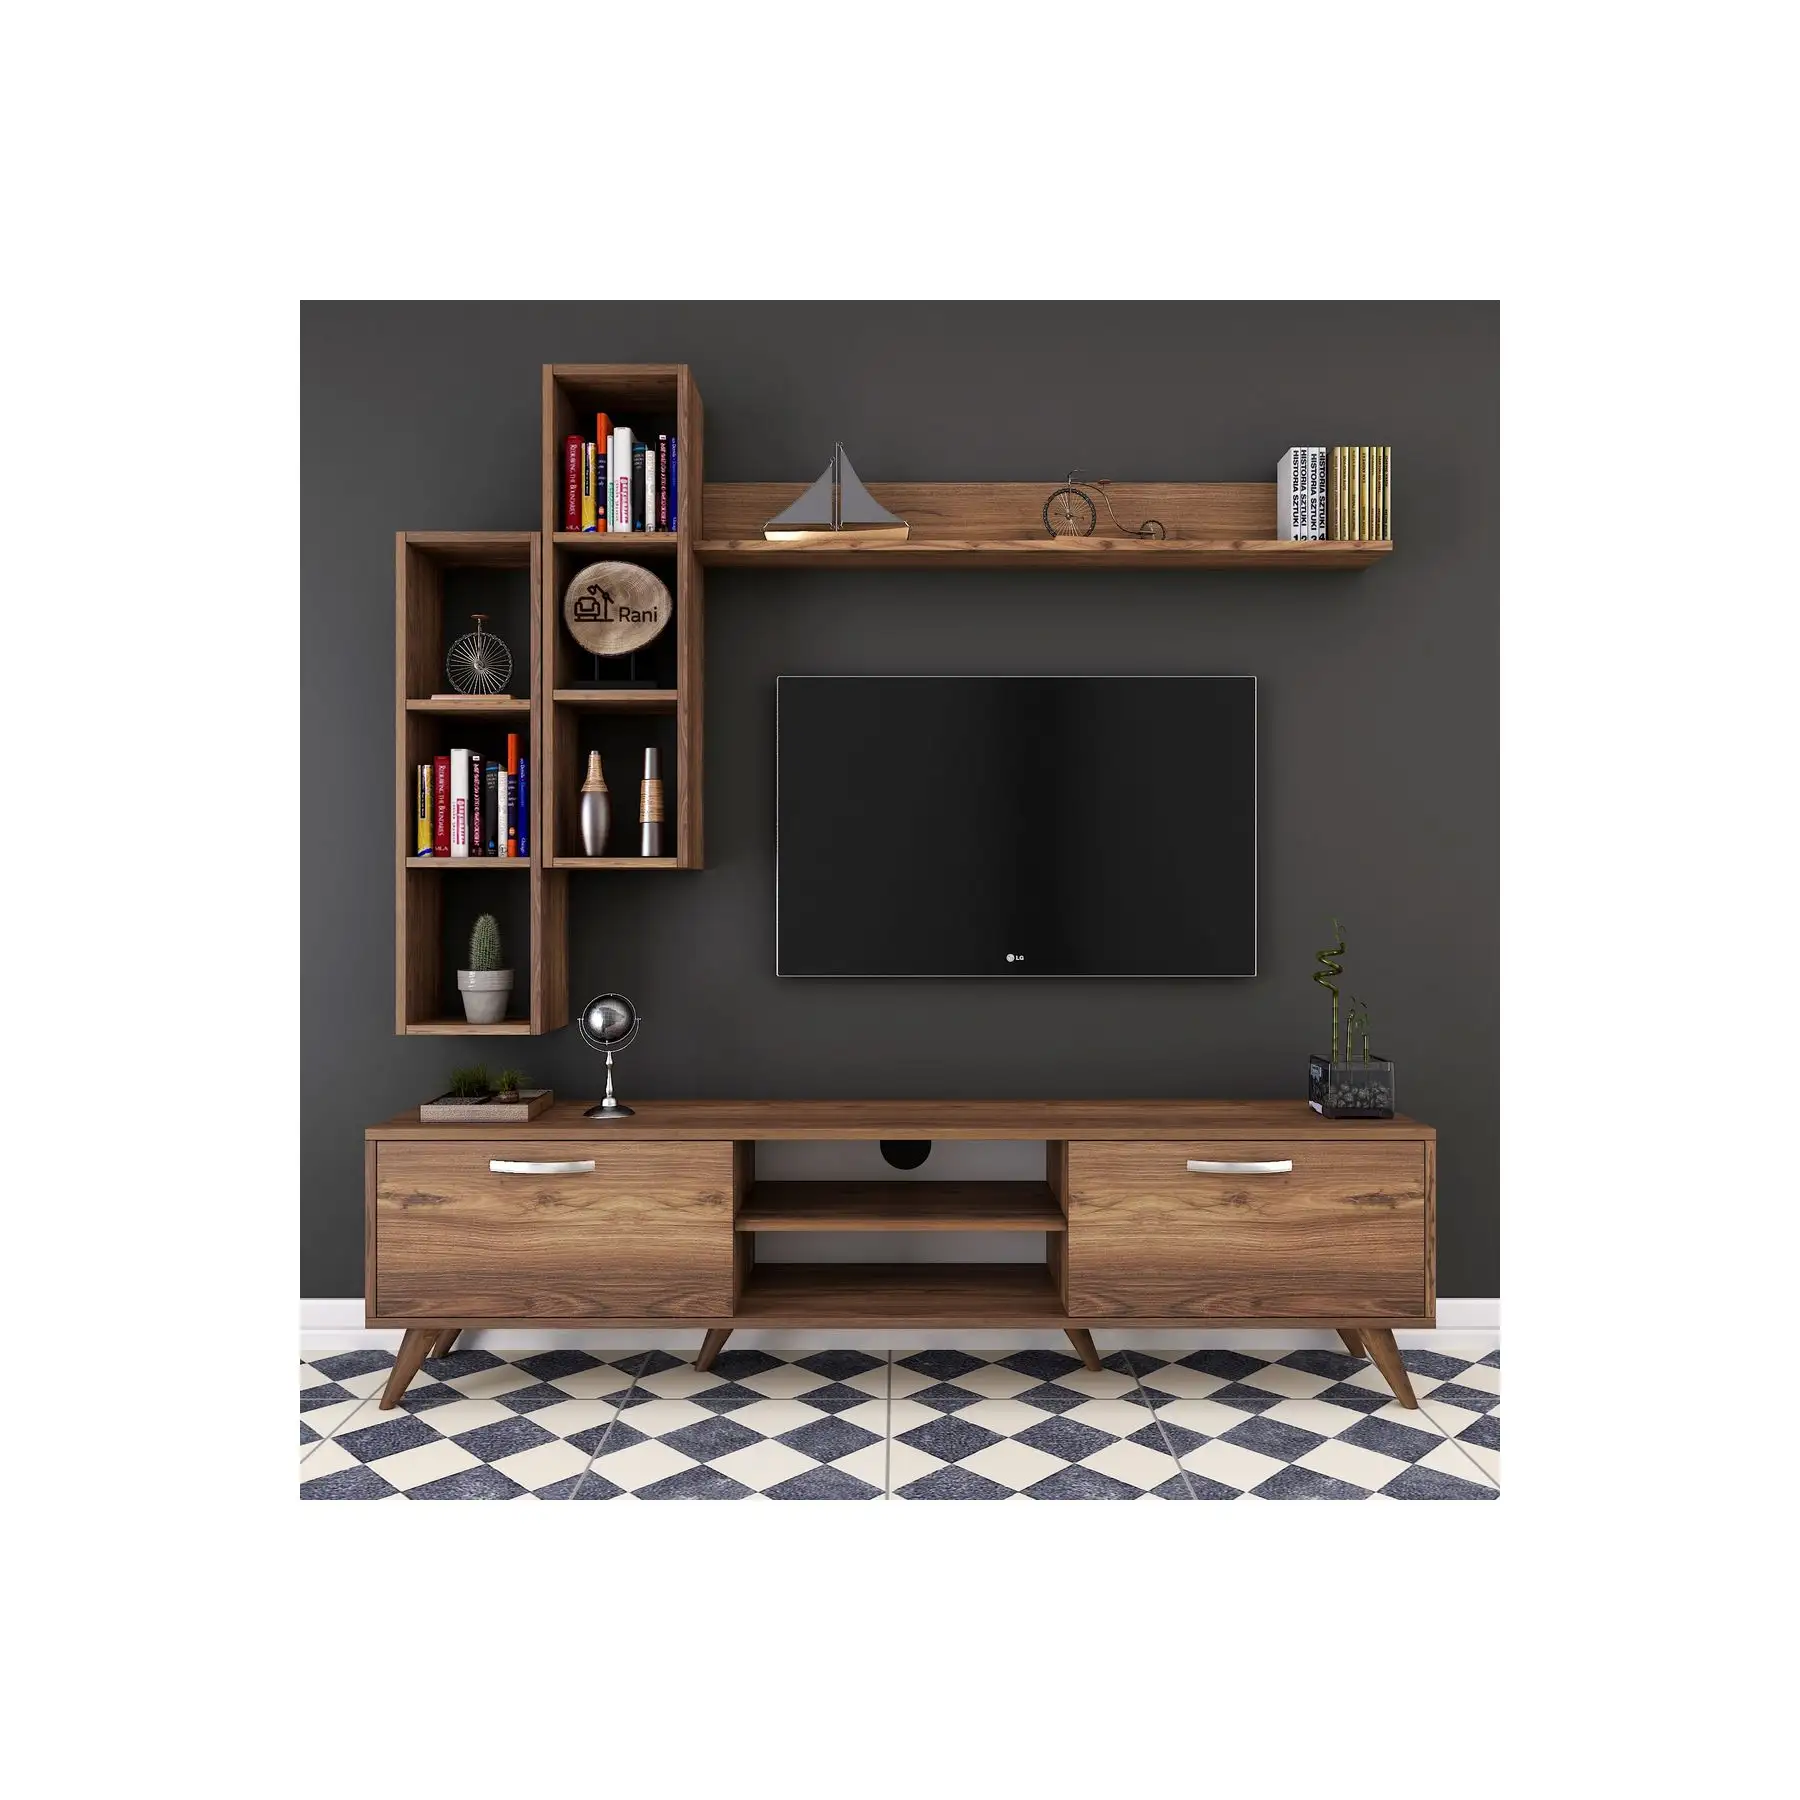 Rani A9 M16 Tv Stand Tv Cabinet Tv Unit With Shelves M-Walnut Color Modern Minimalist Design Best Price Turkish Wholesale 262